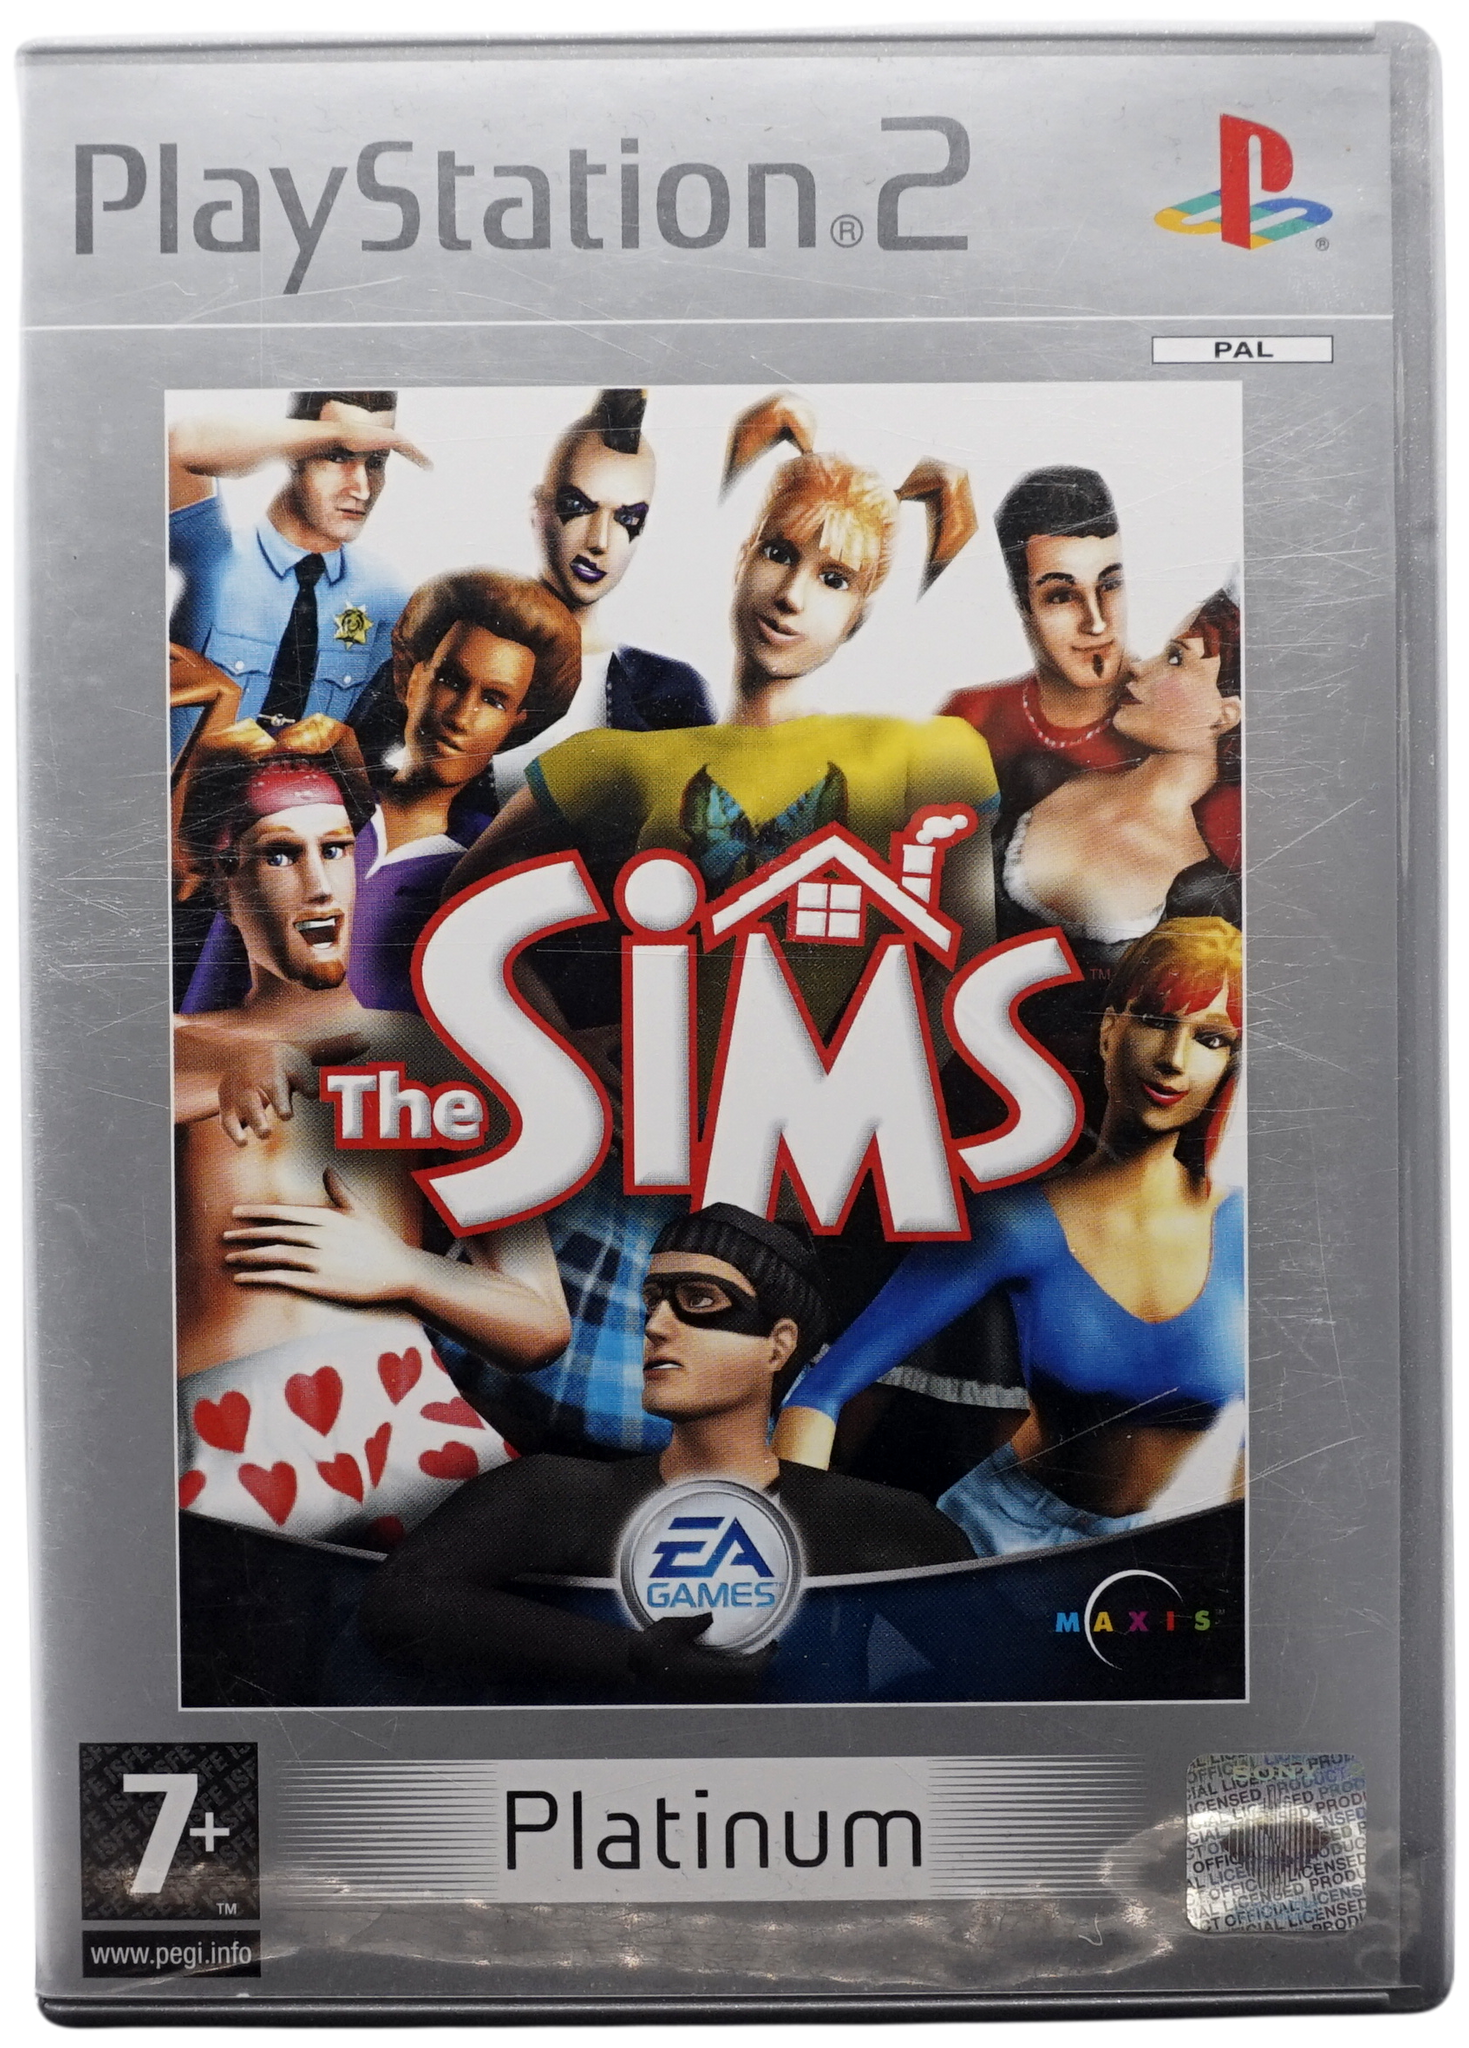 The Sims (Platinum) (PS2)